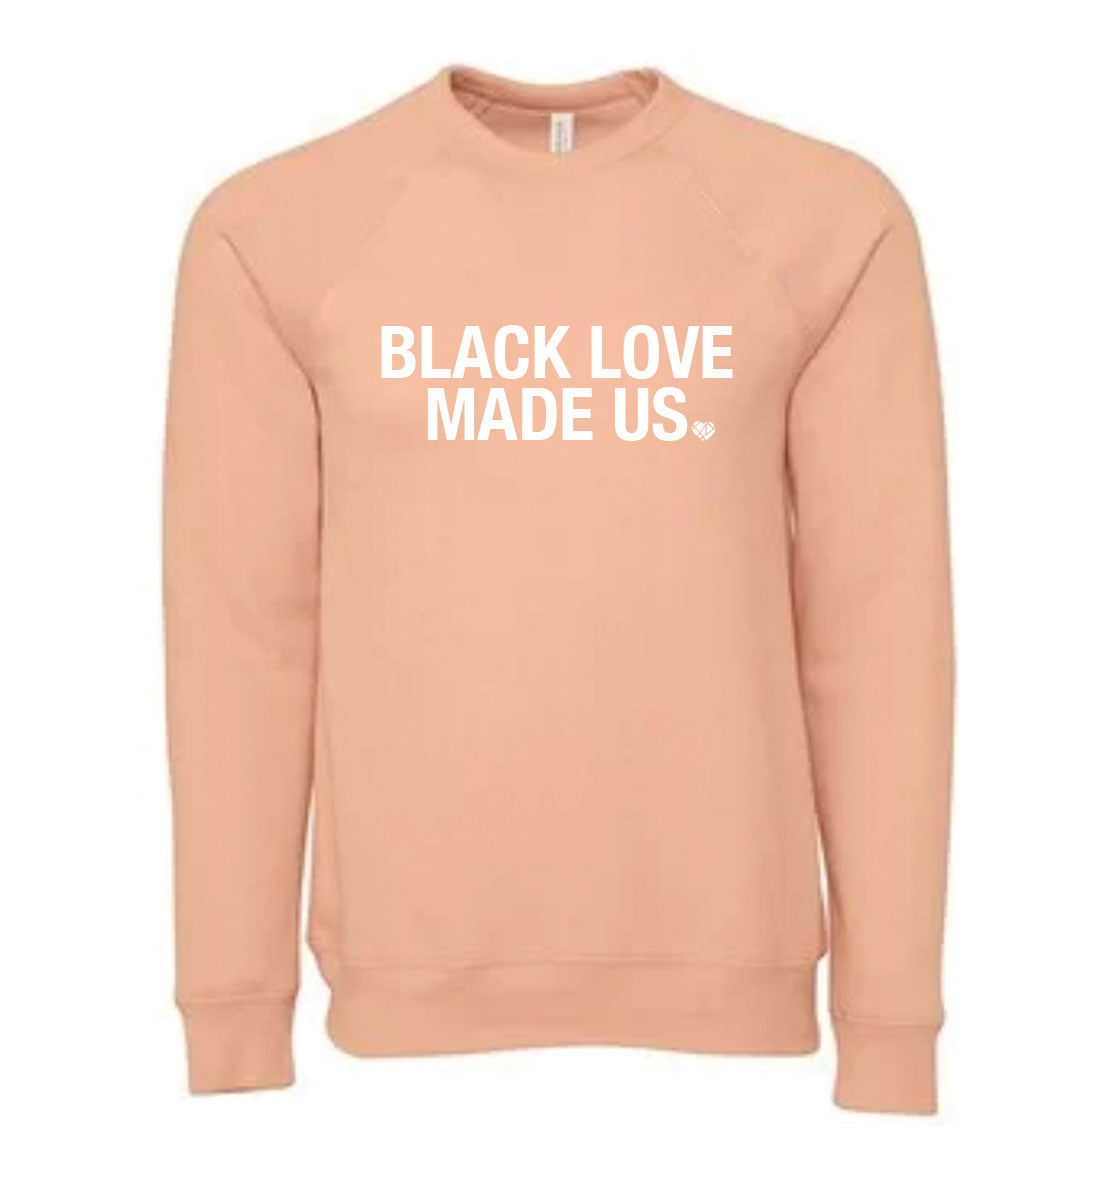 BLACK LOVE MADE US